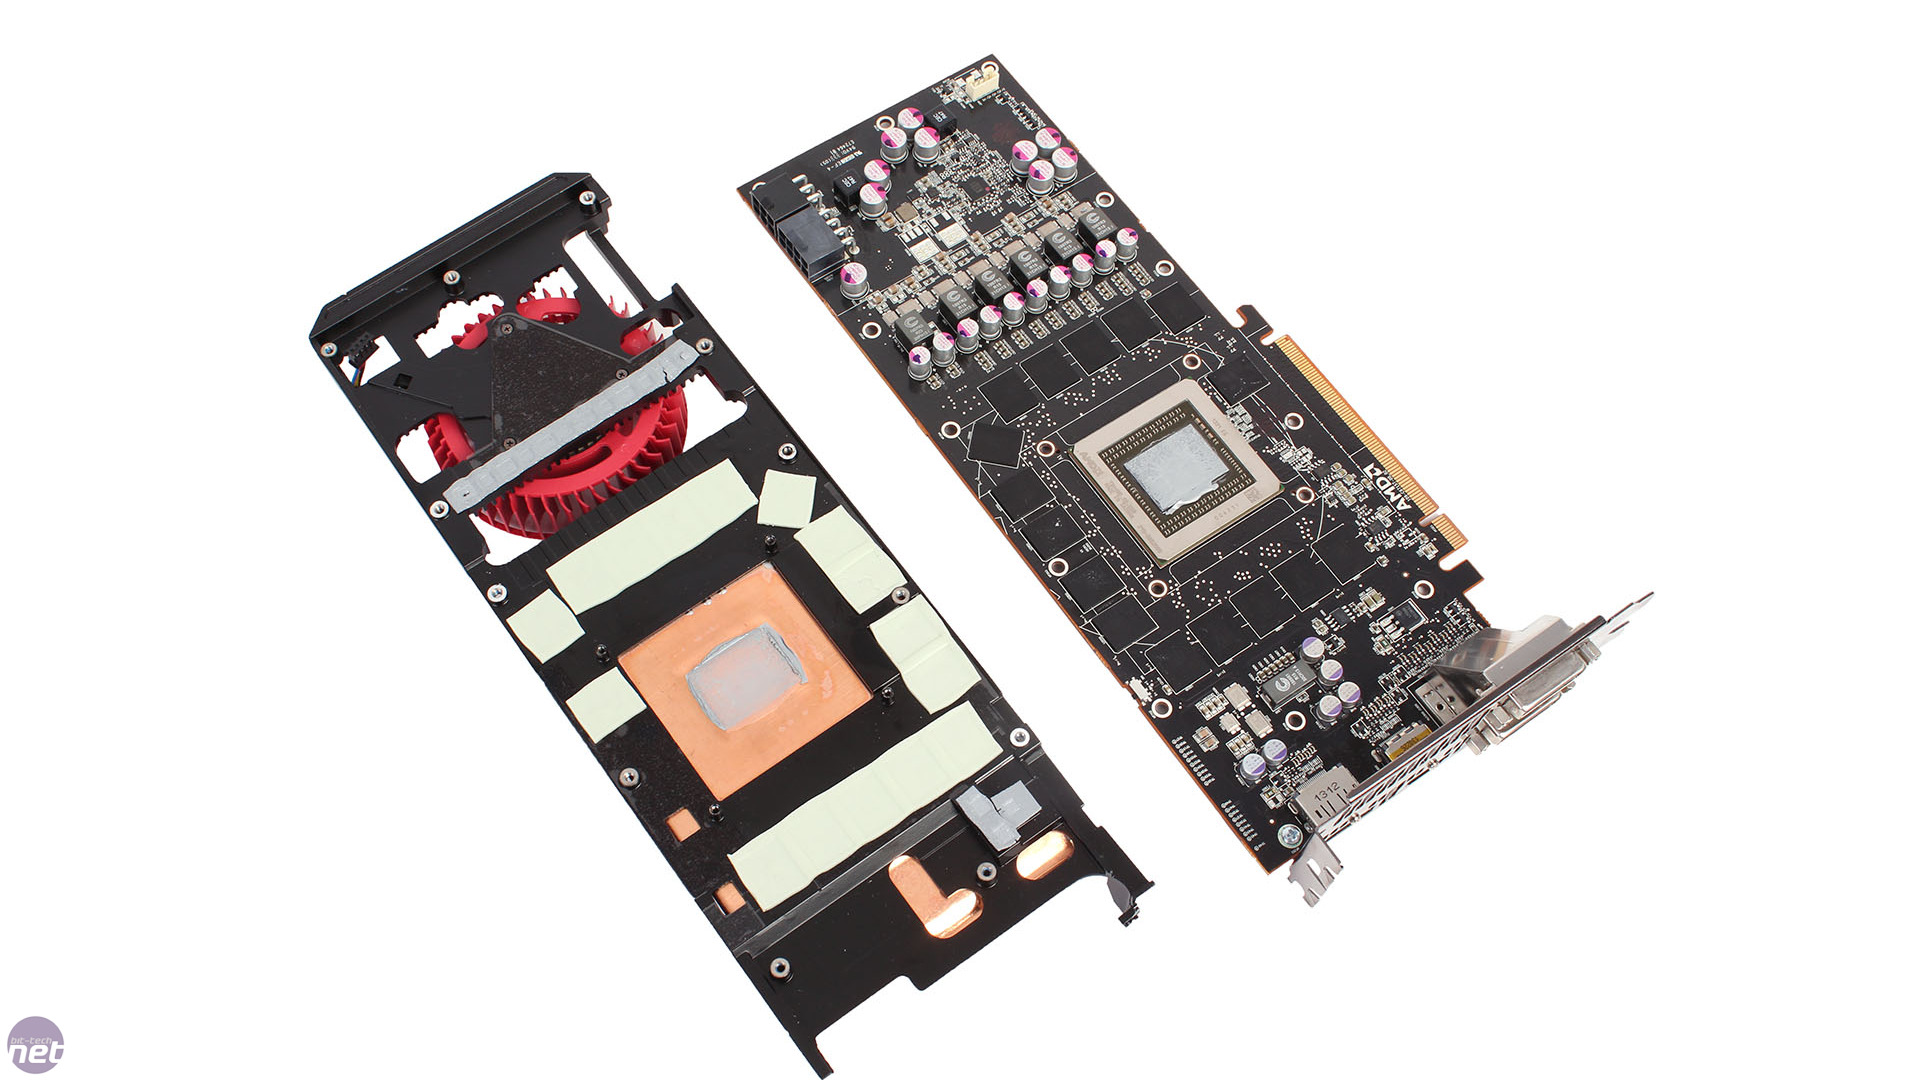 AMD Radeon R9 290 Review | bit-tech.net